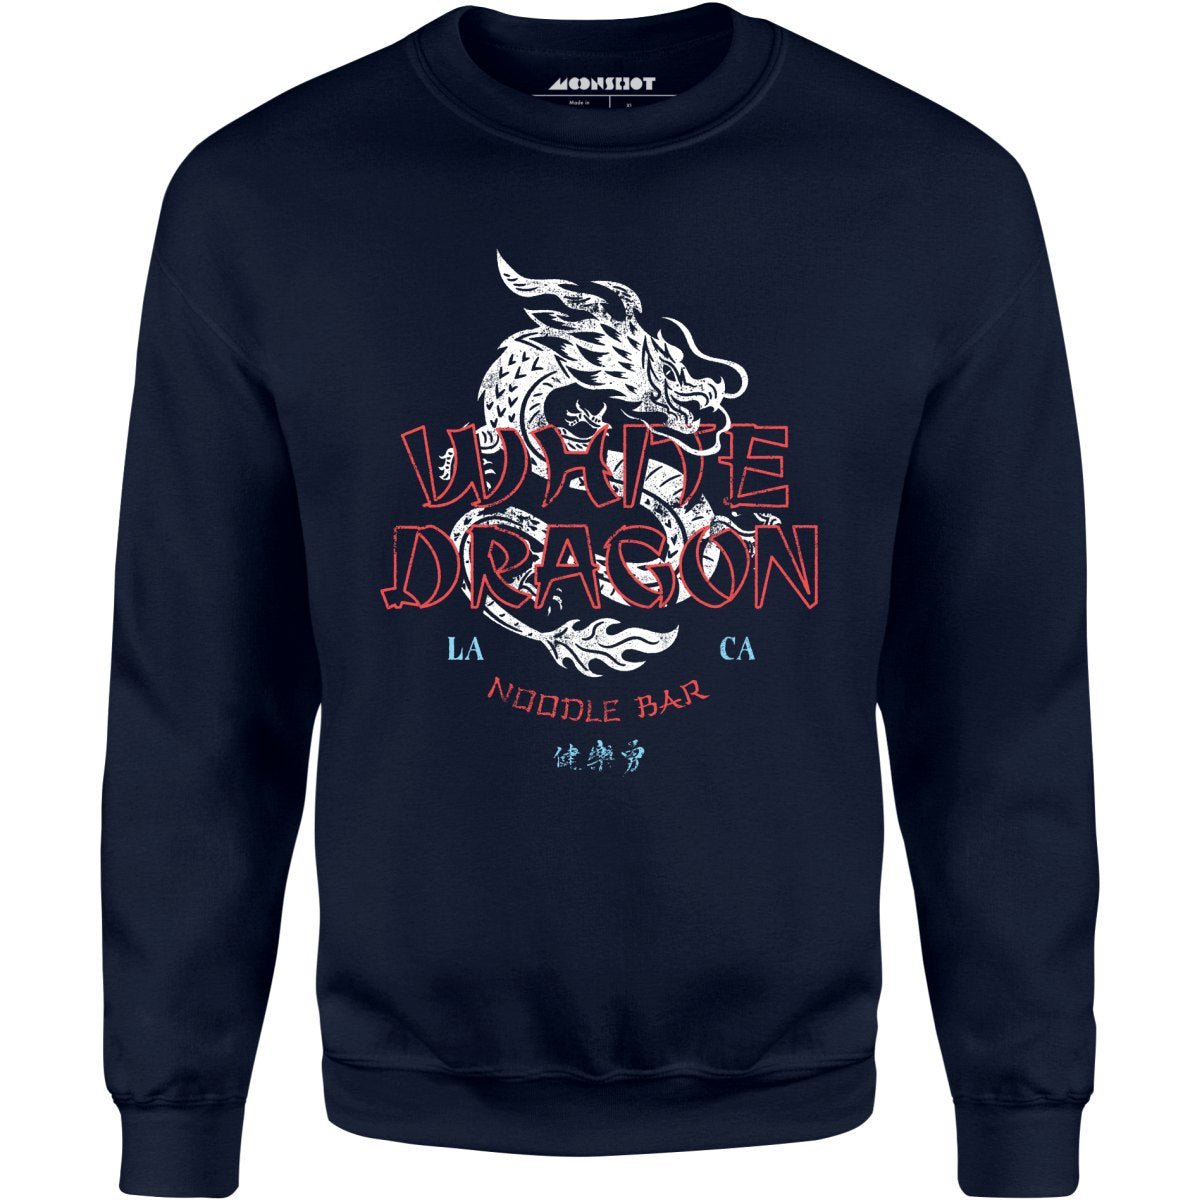 White Dragon Noodle Bar - Unisex Sweatshirt